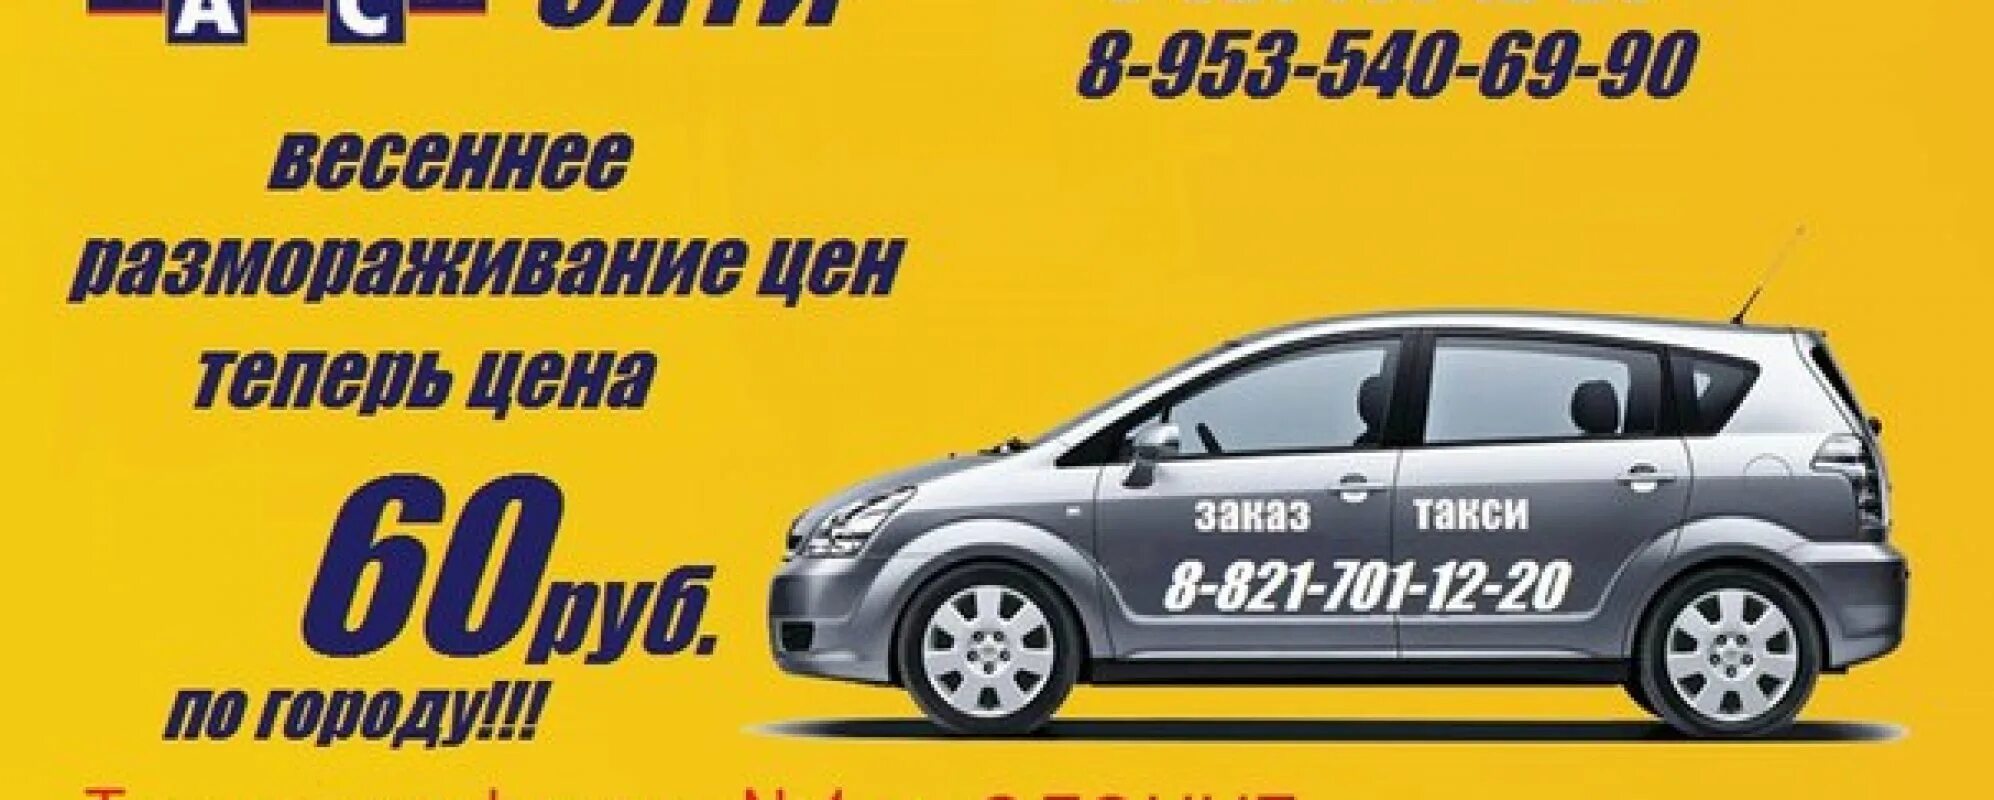 Номер телефона такси сити. Такси Олонец. Такси Олонец номера телефонов. Номера такси города Олонец.